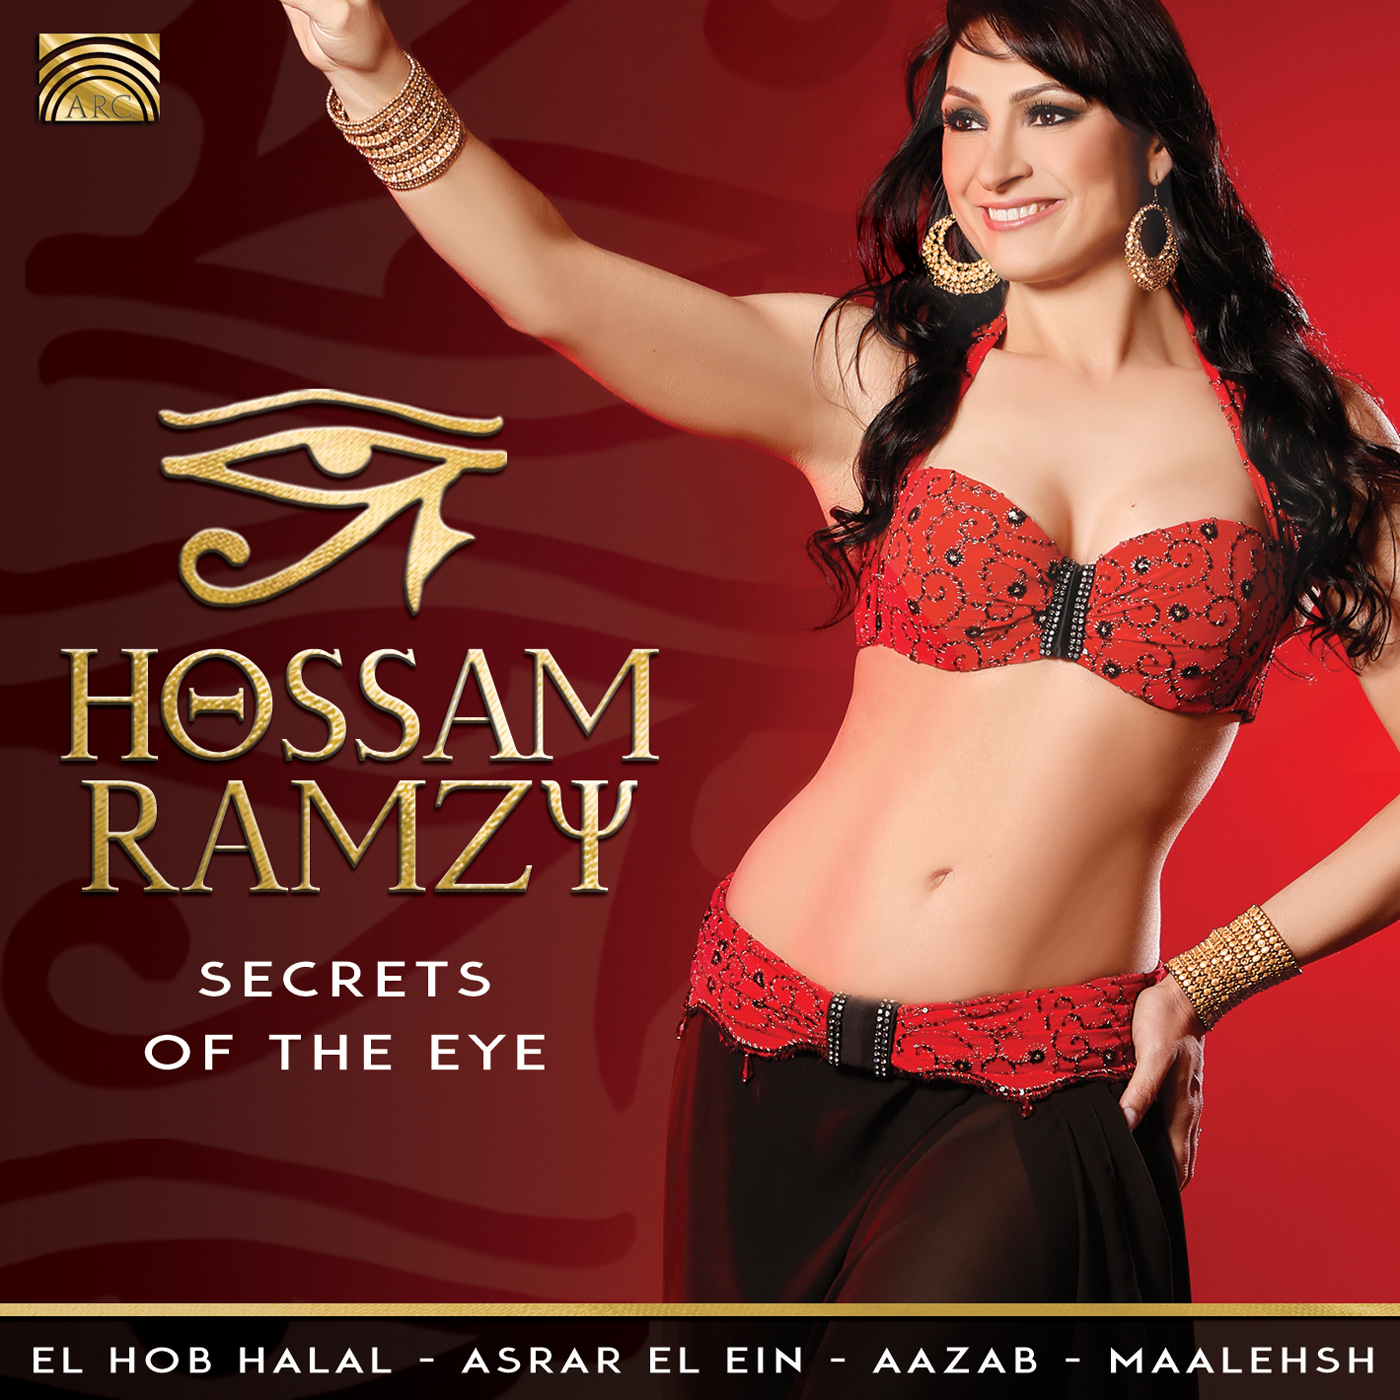 EGYPT Hossam Ramzy: Secrets of the Eye